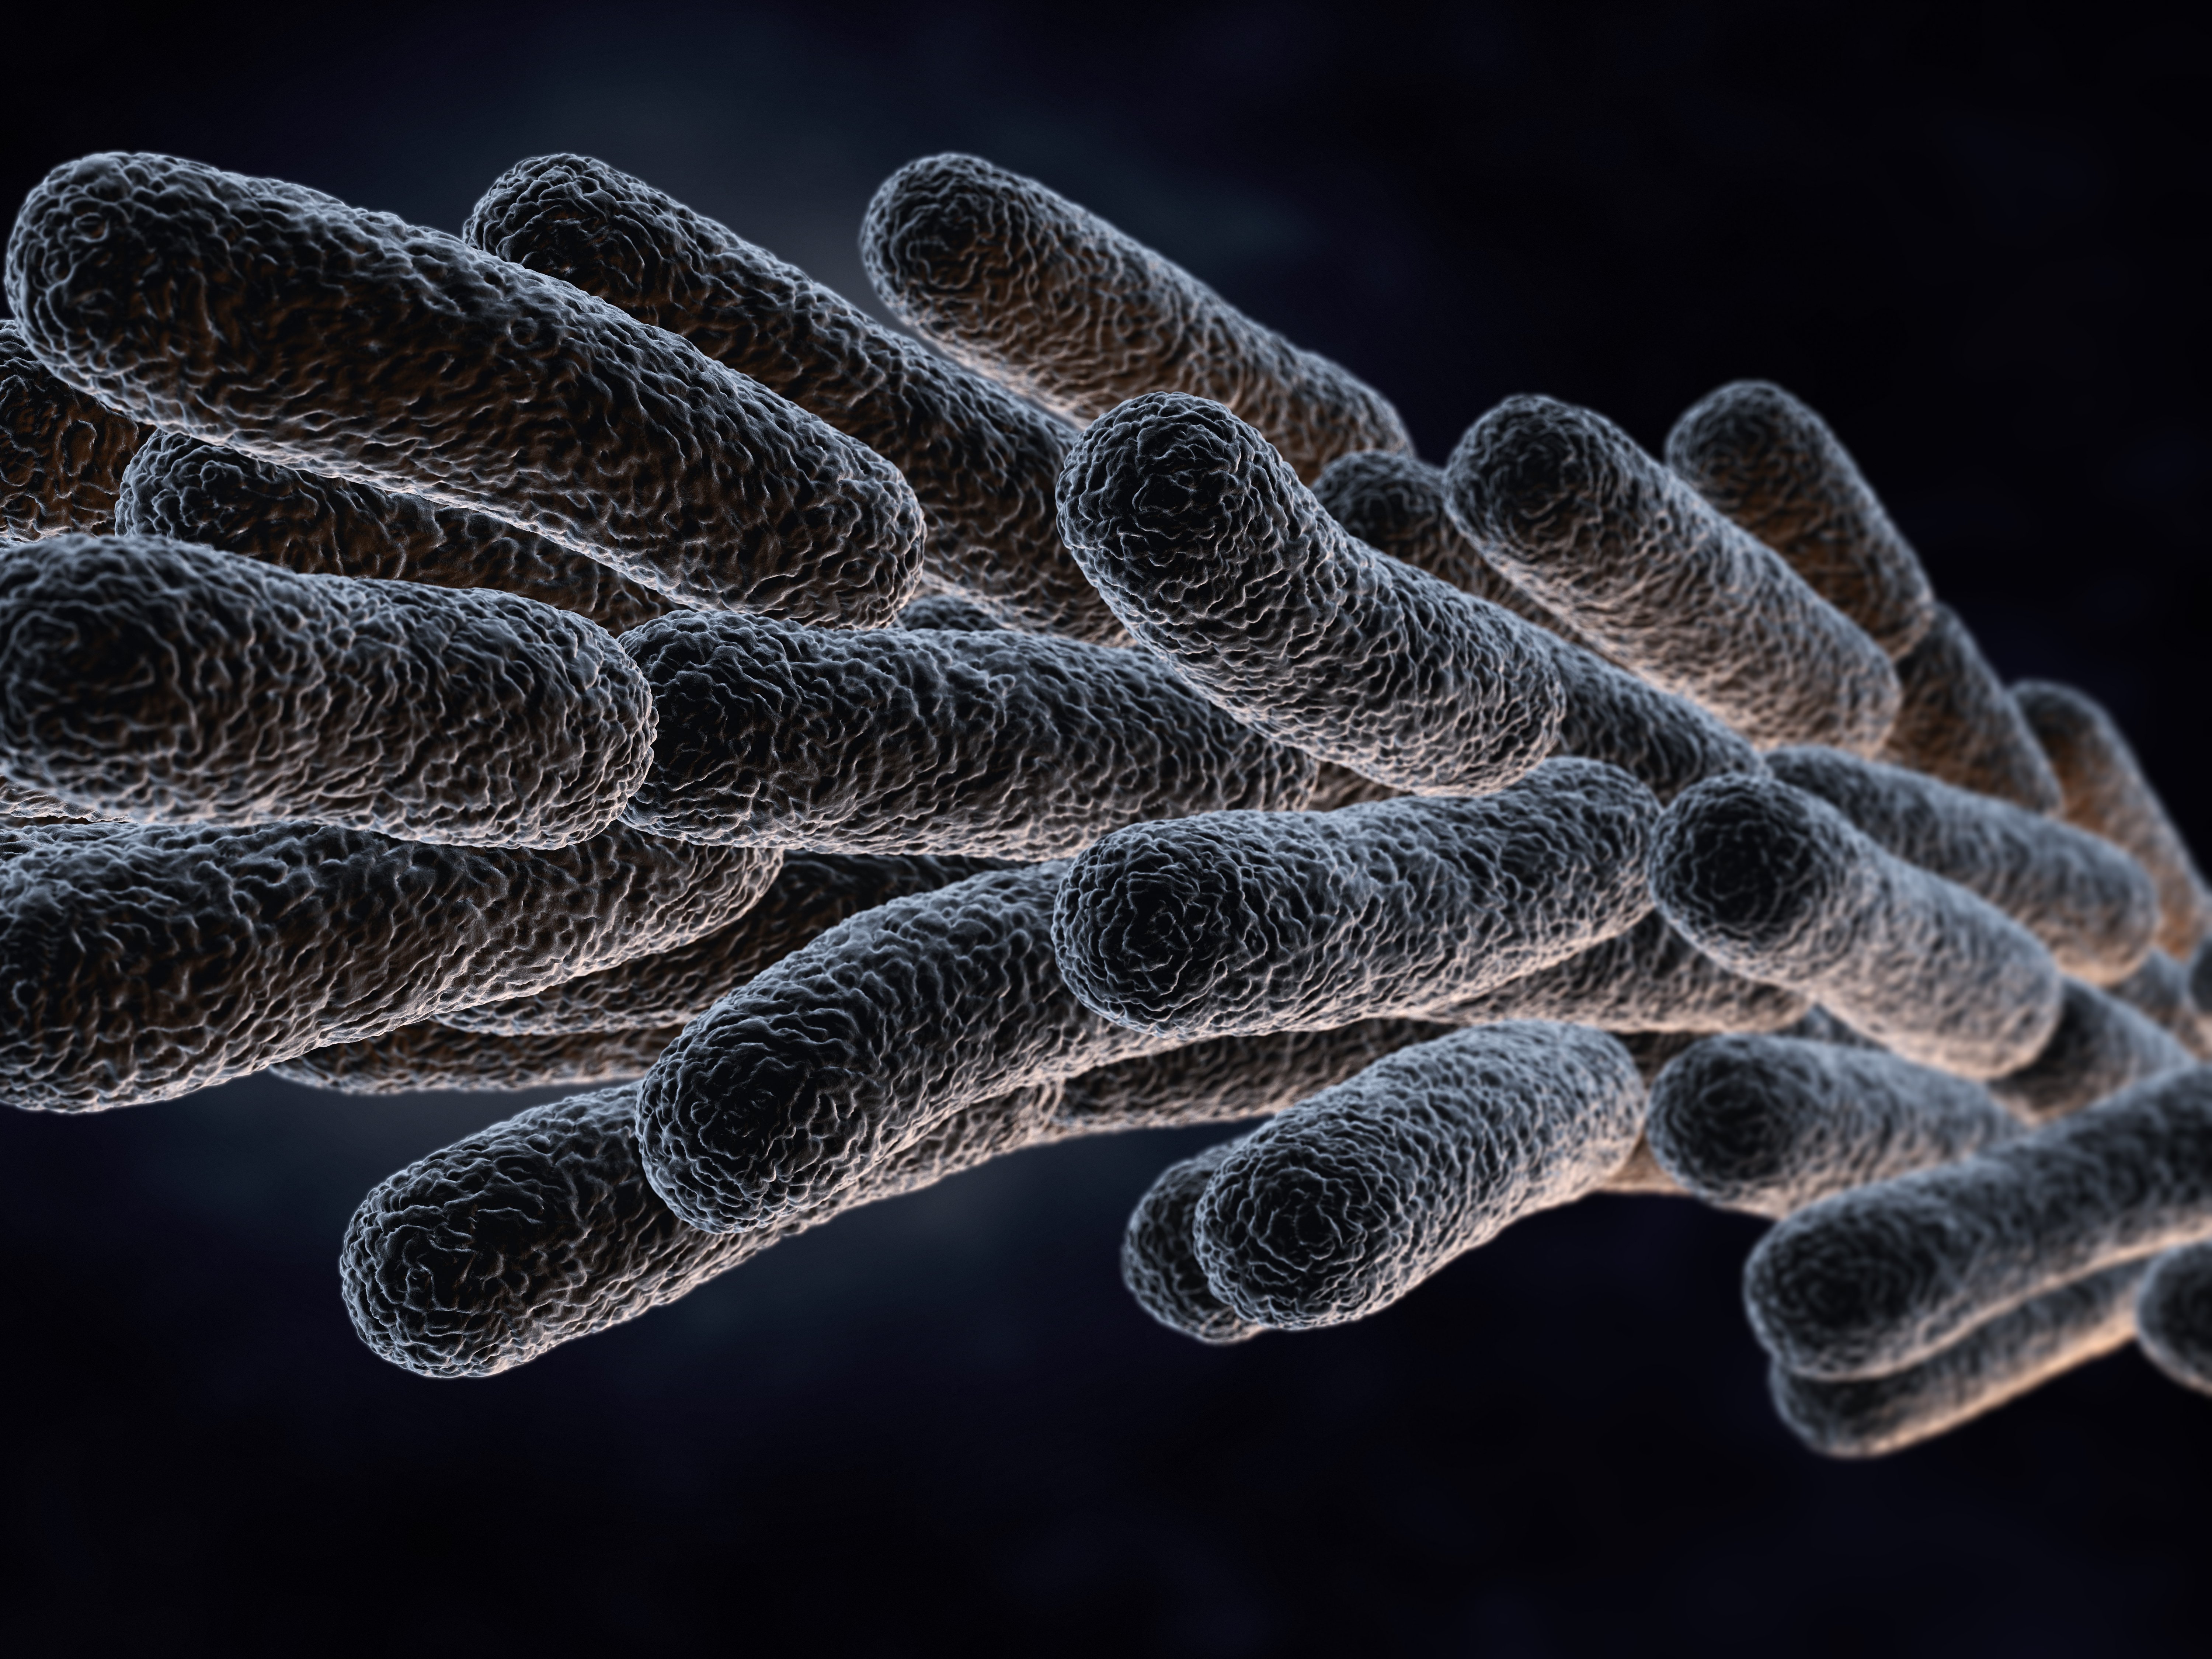 What is the OSHA Standard for Legionella?